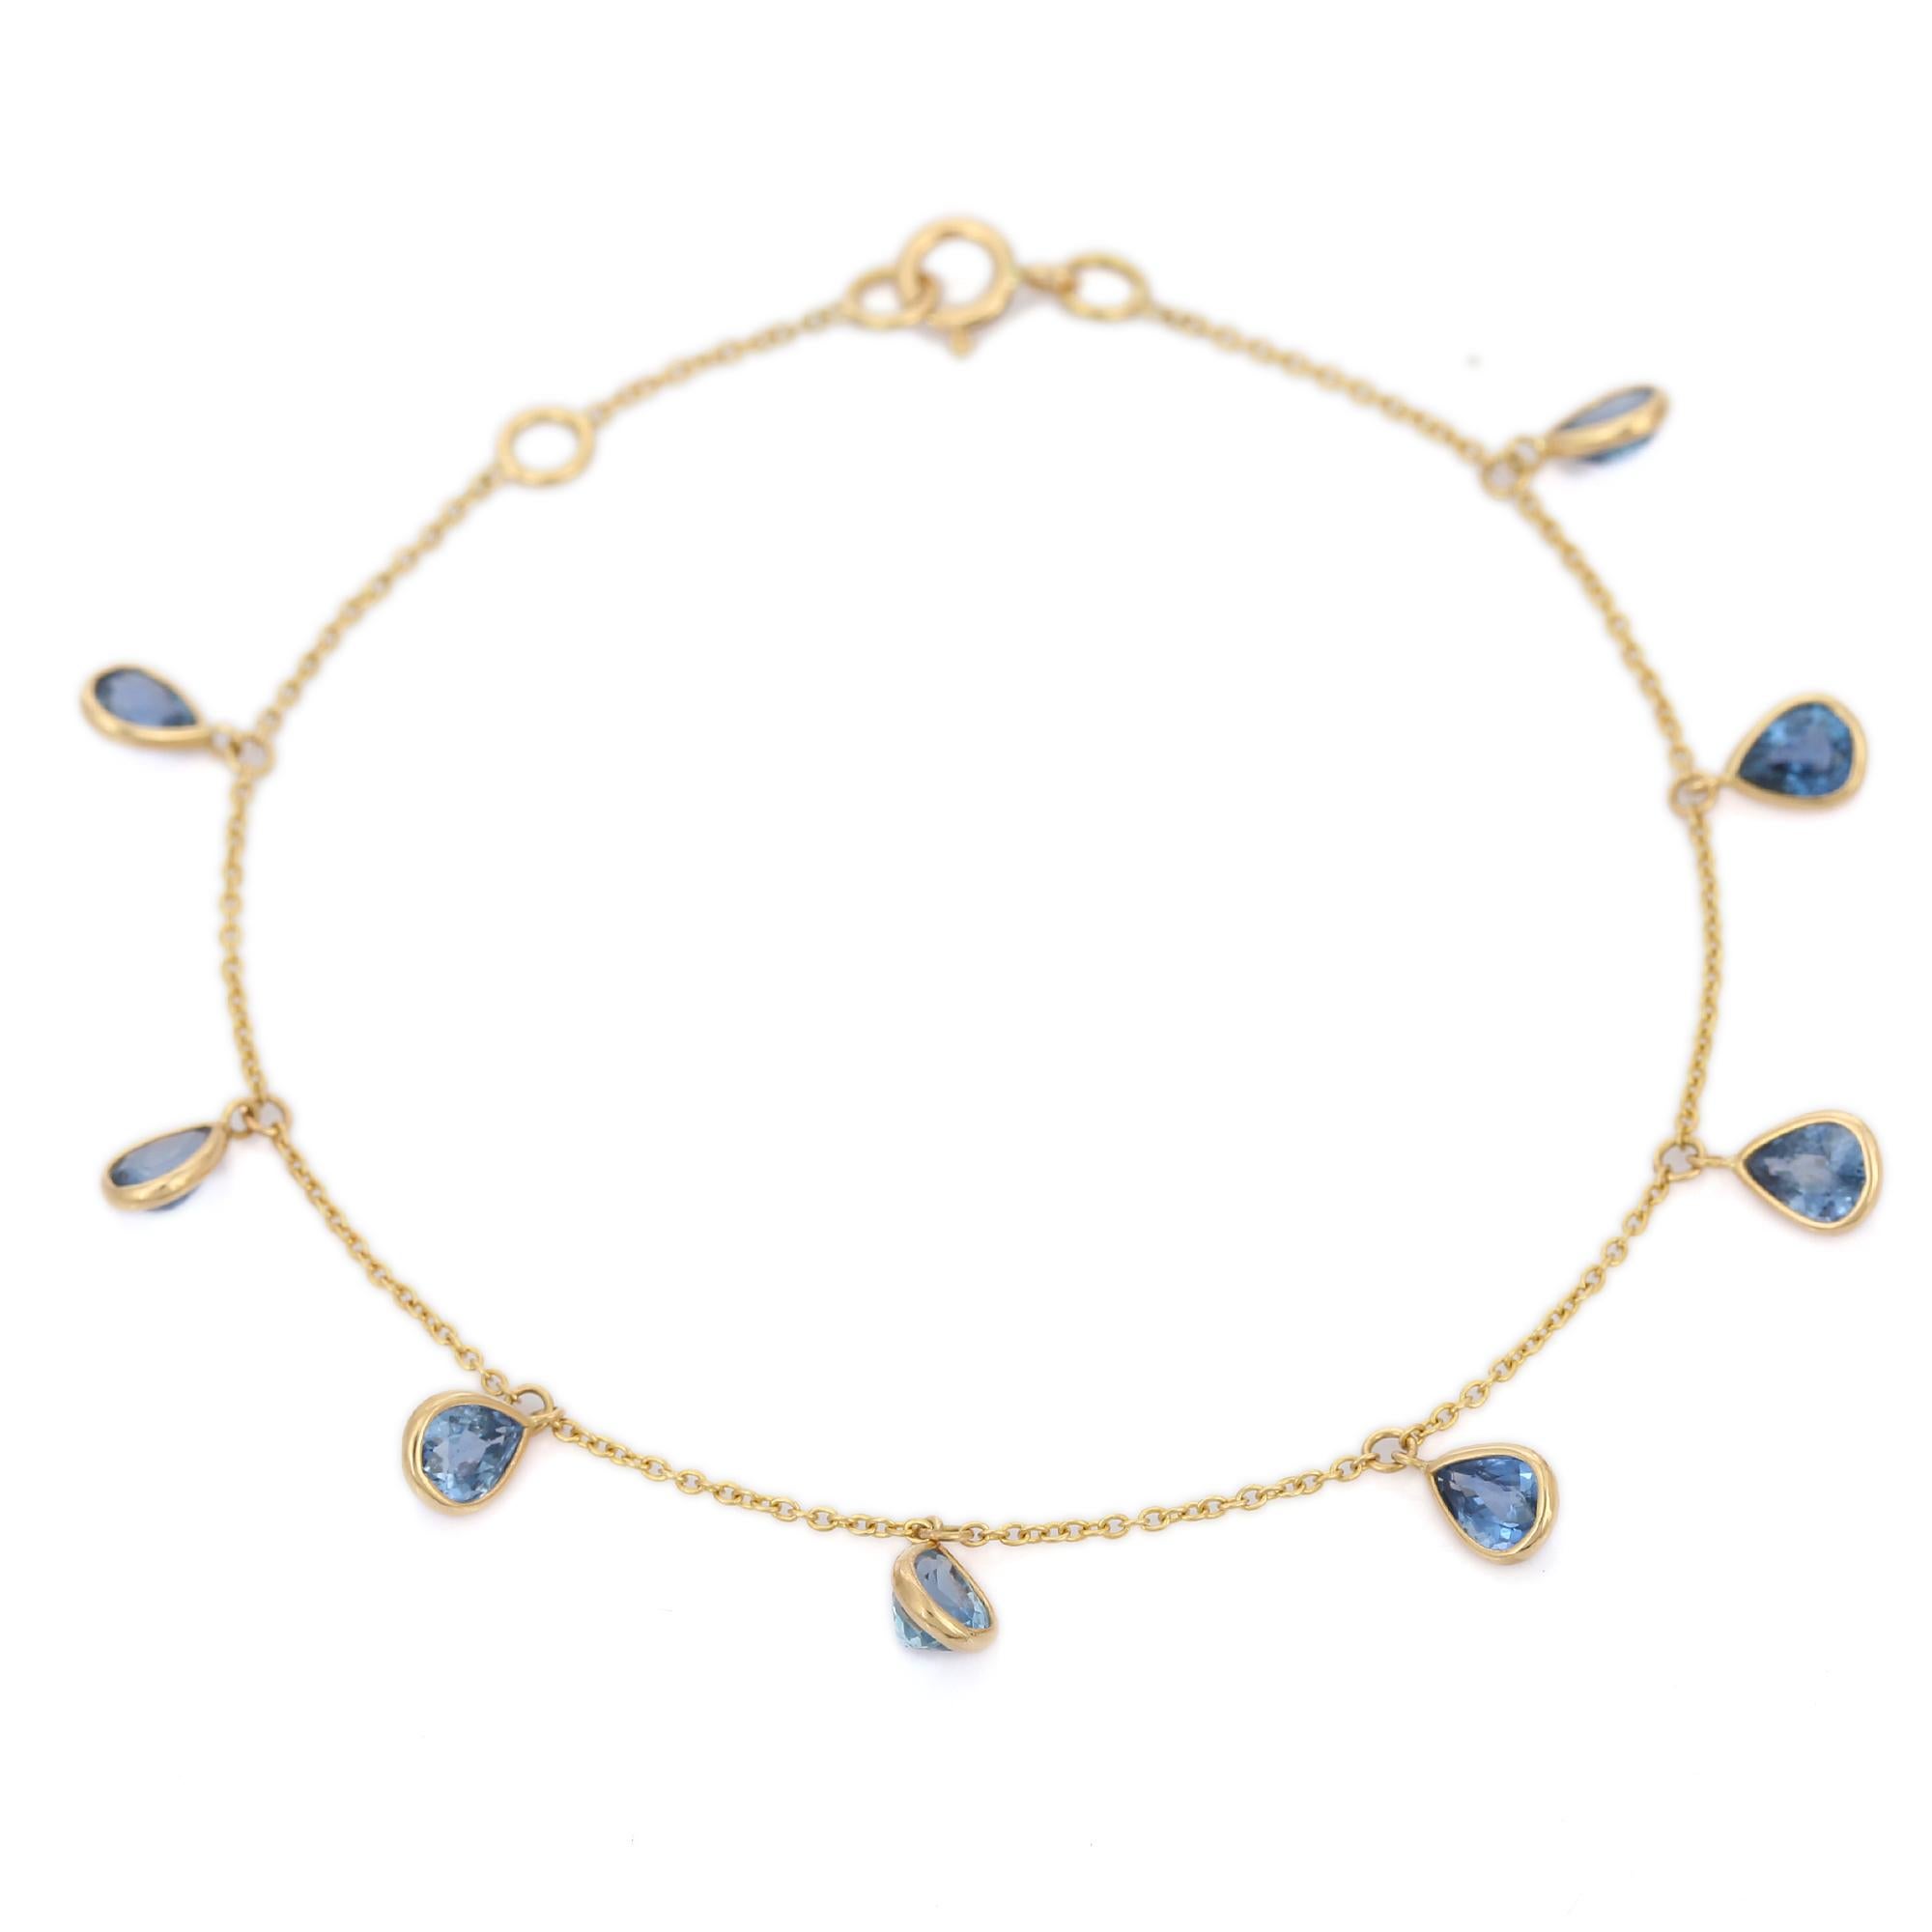 Bracelet chaîne en or jaune 18 carats avec saphir bleu de 3,44 carats